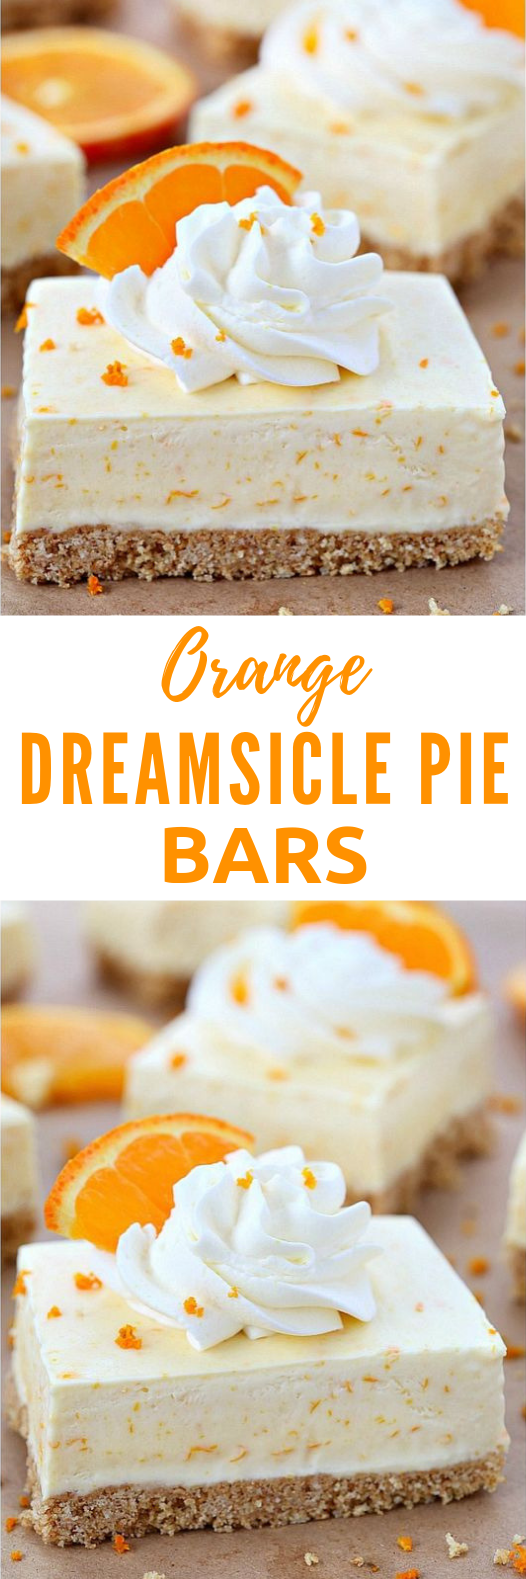 ORANGE DREAMSICLE PIE BARS RECIPE #Dessert #Bars